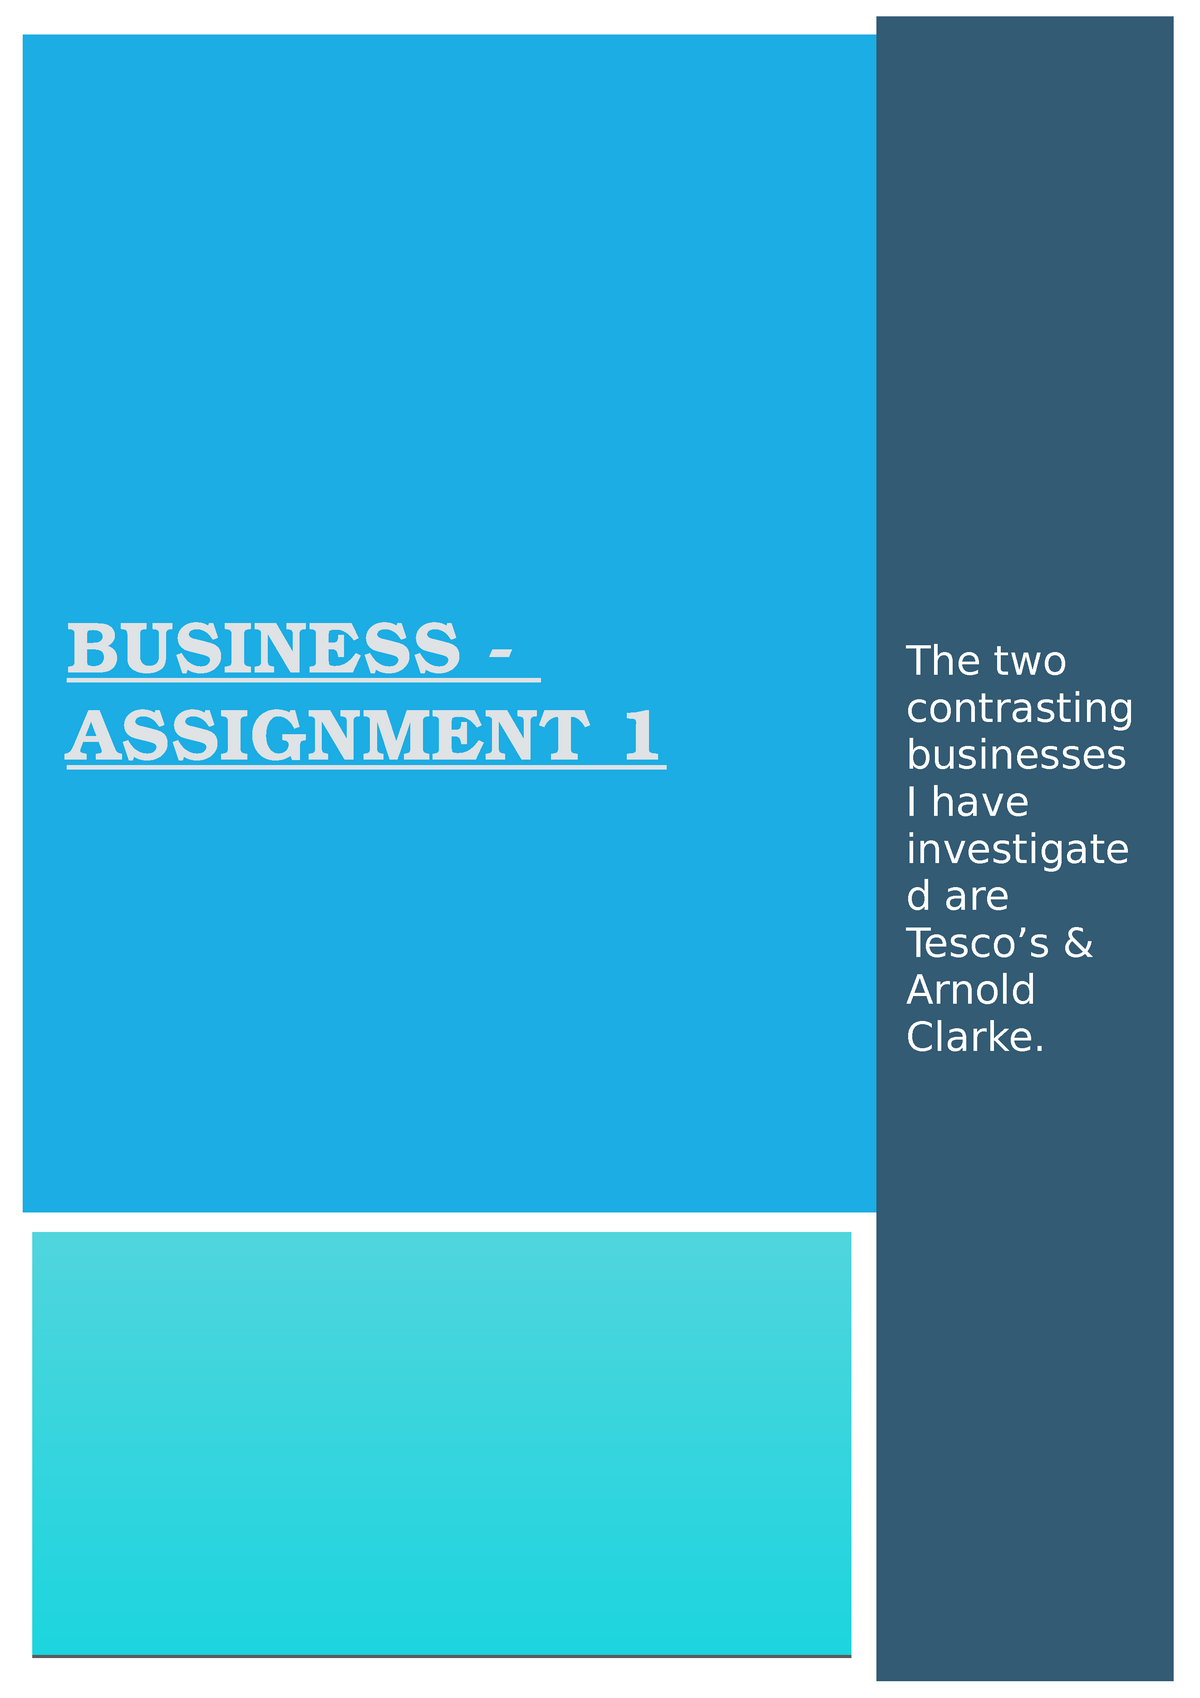 business unit 14 assignment 1